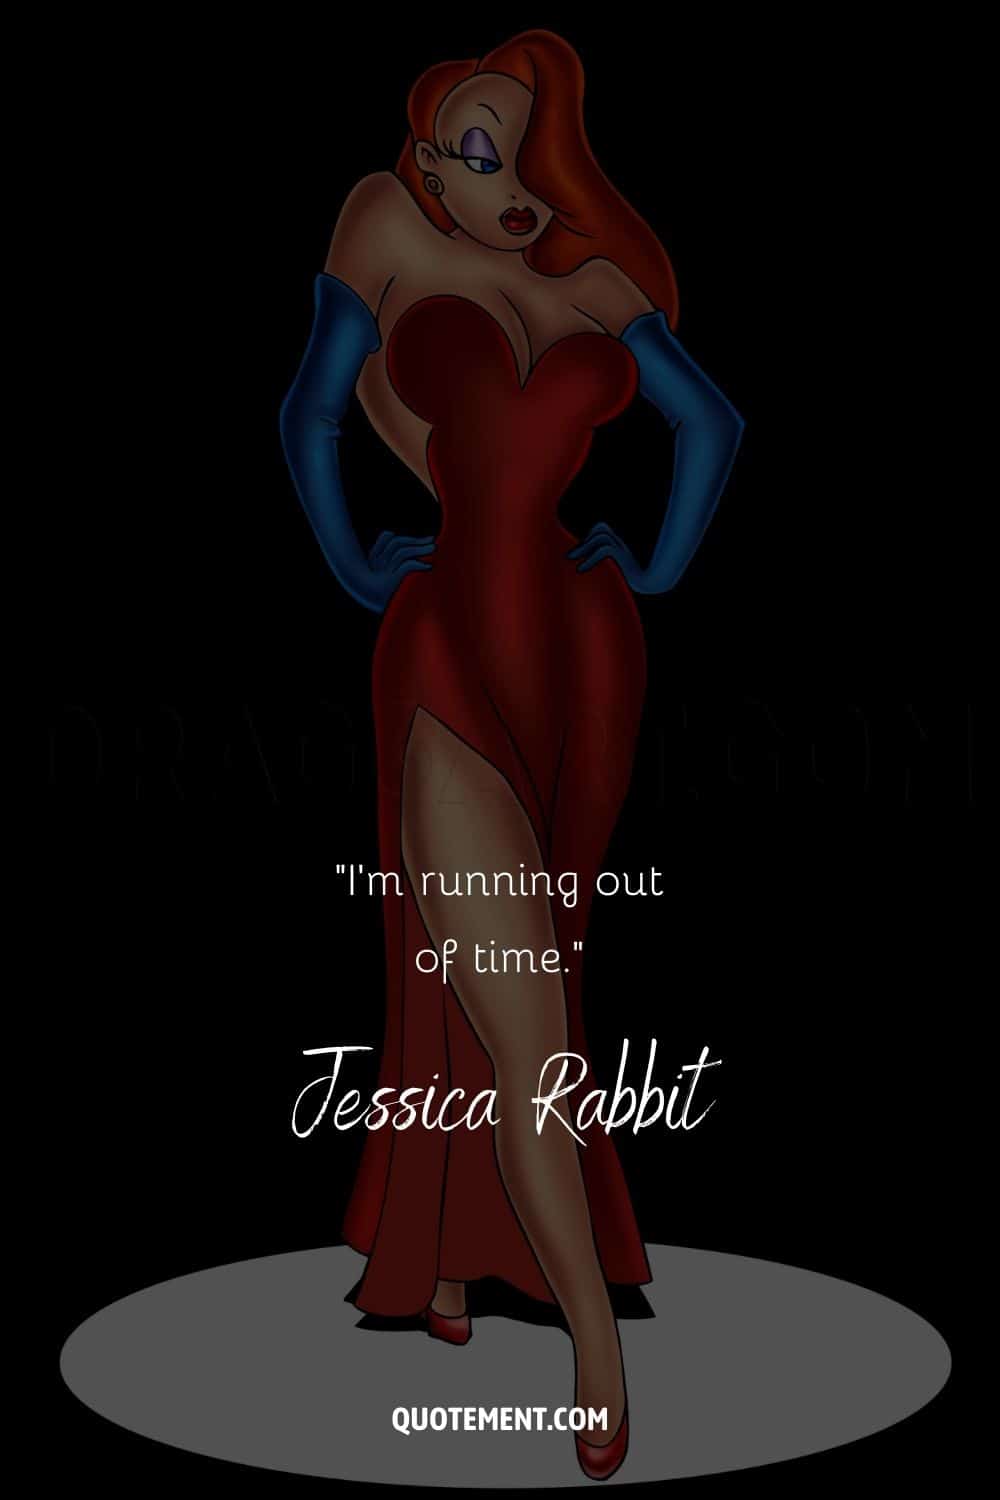 Jessica Rabbit image representing her famous movie quote
